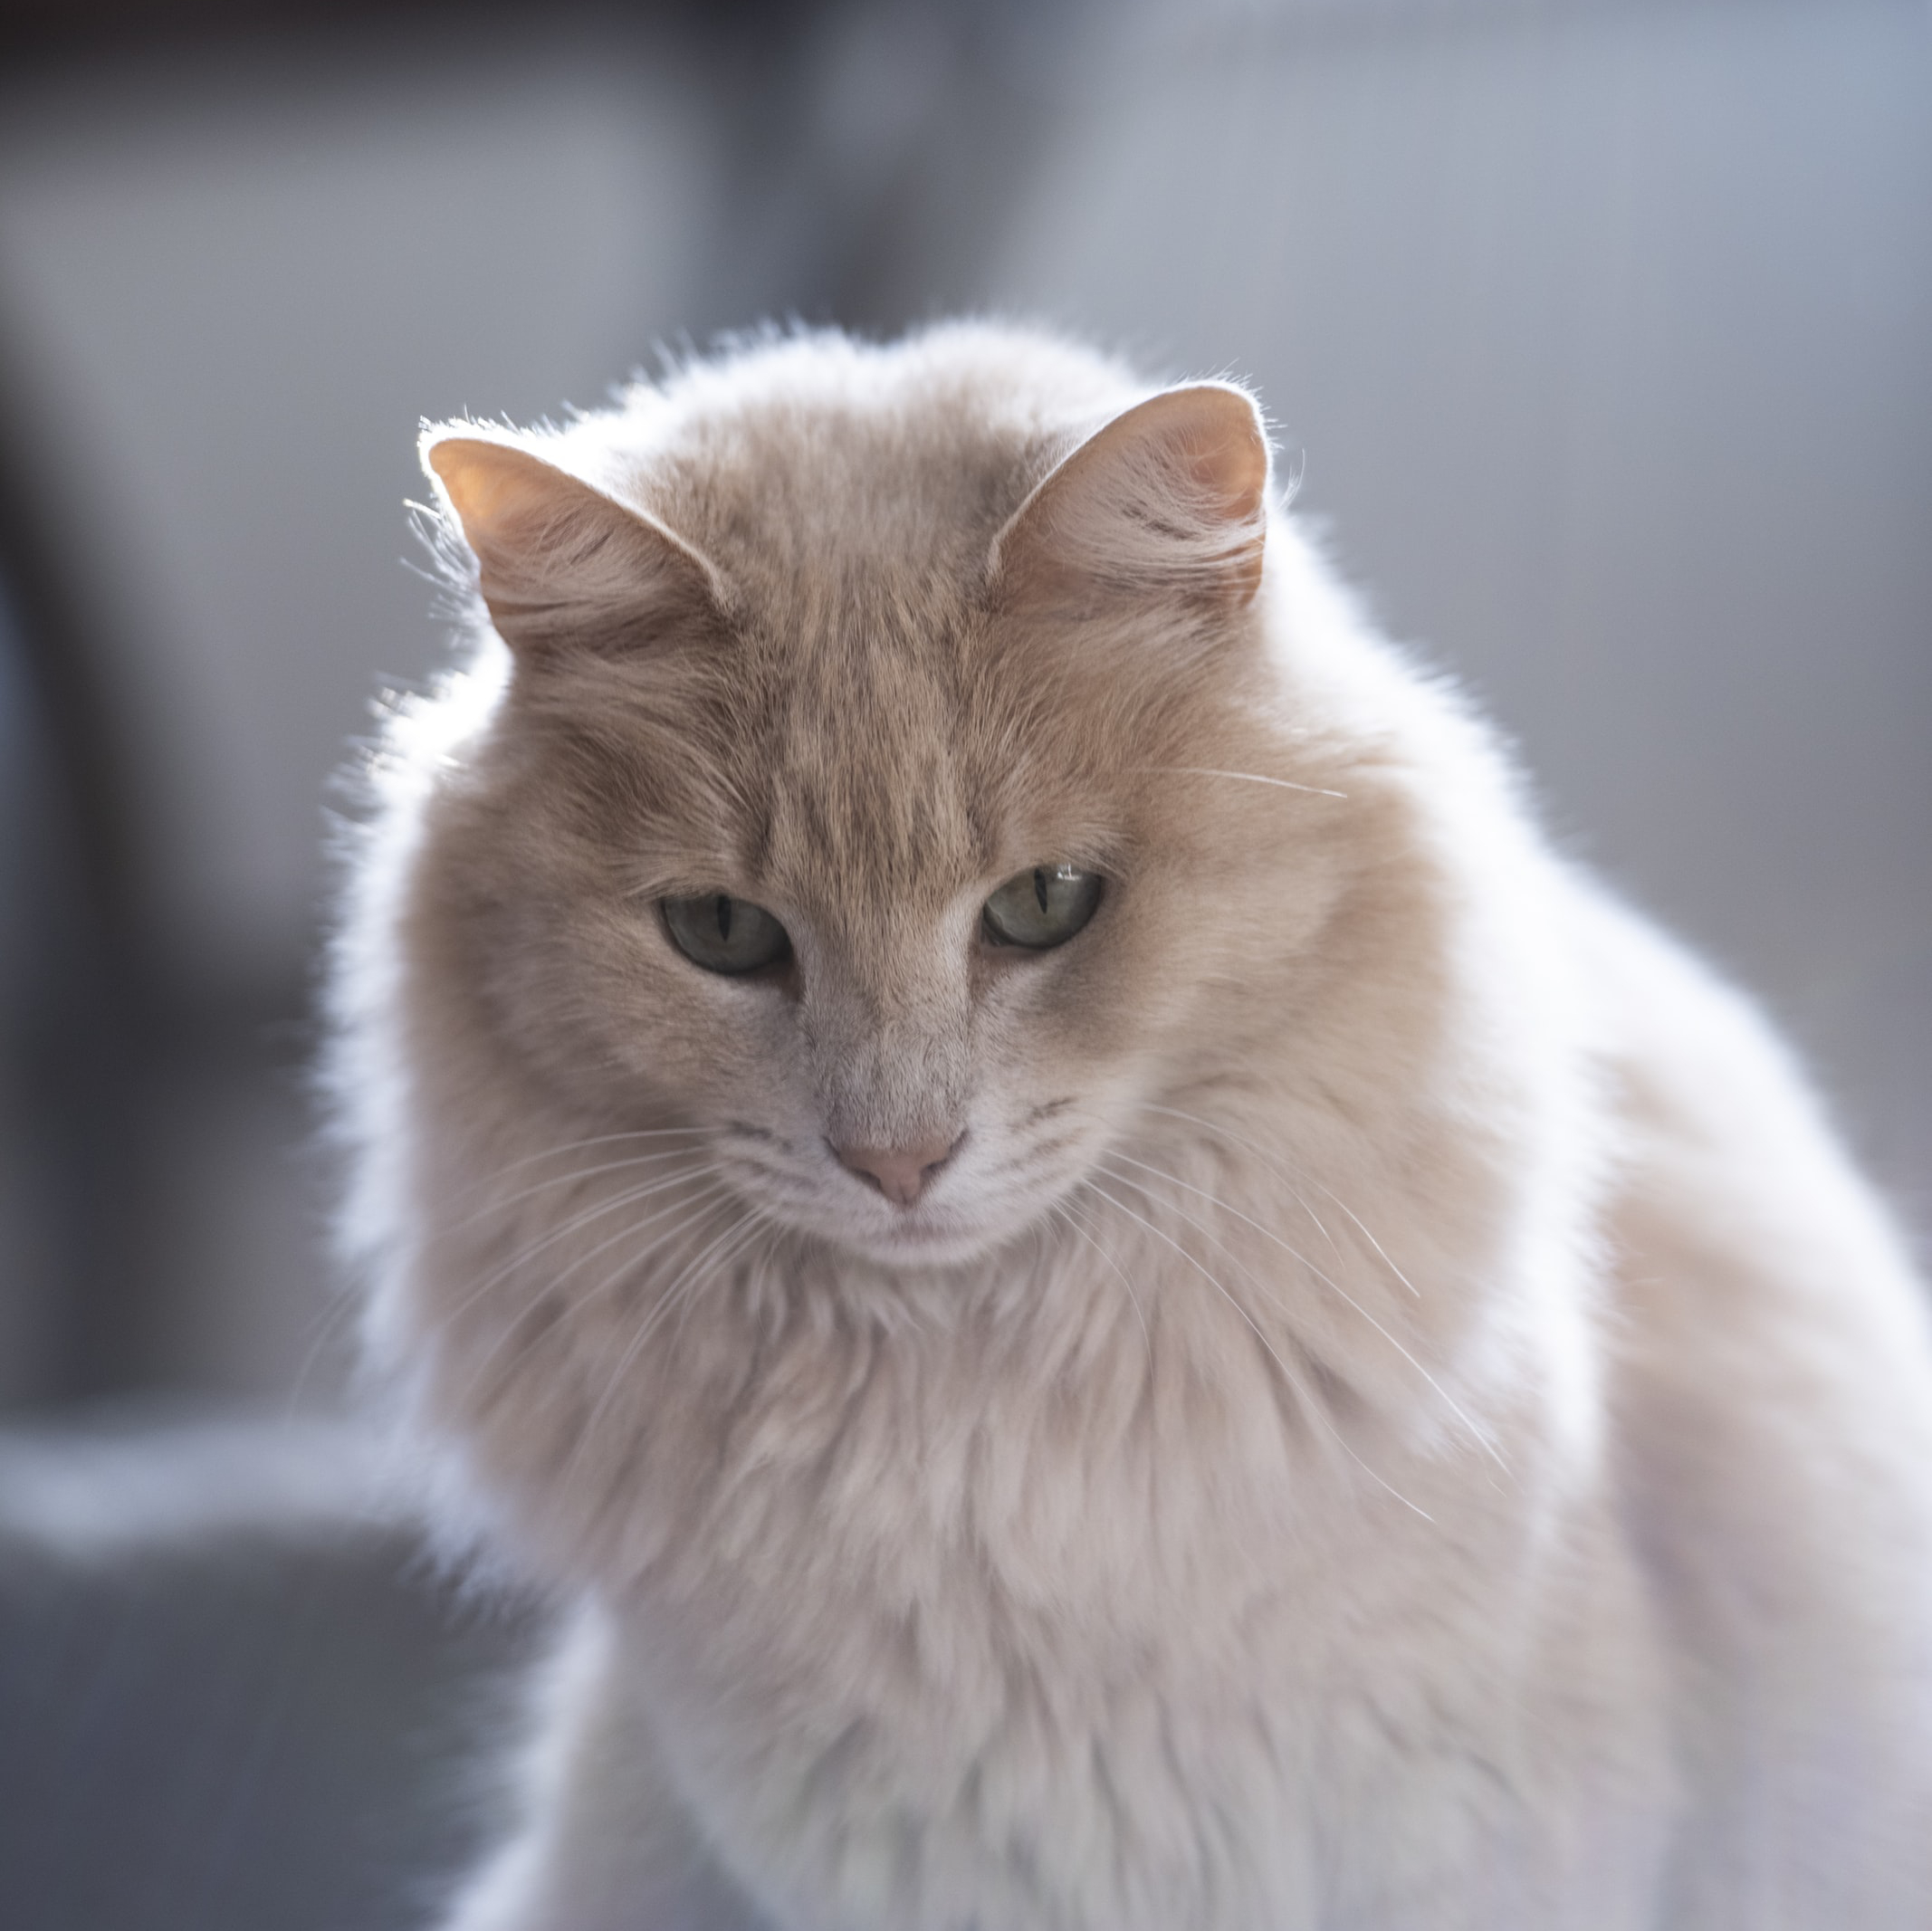 Fluffy cream coloured cat named Galaxy